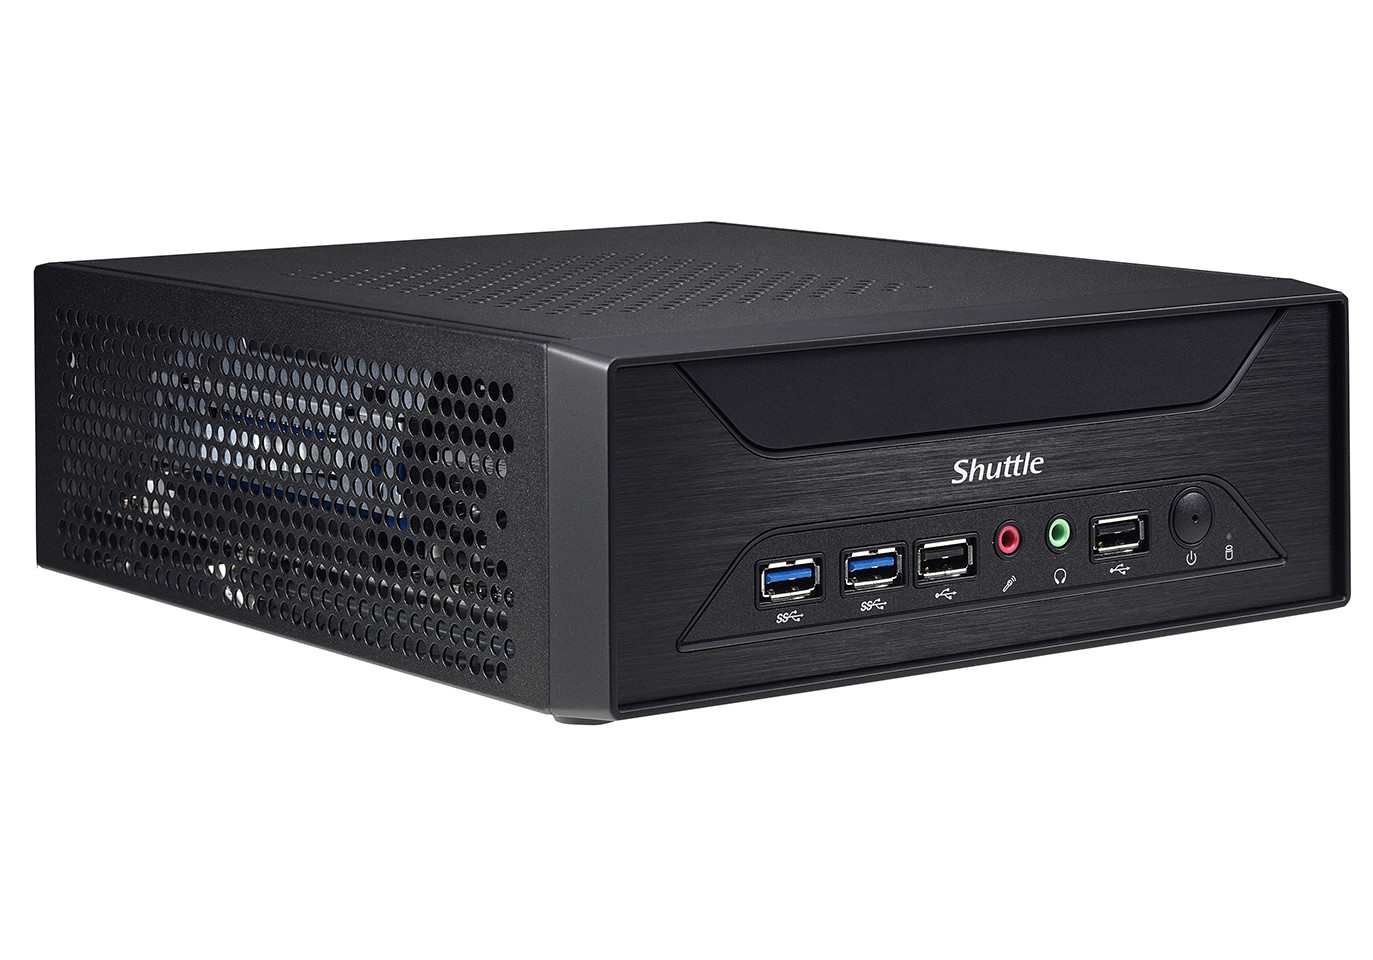 Shuttle Announces 3-litre PC with Slot for PCIe x16 Expansion Cards